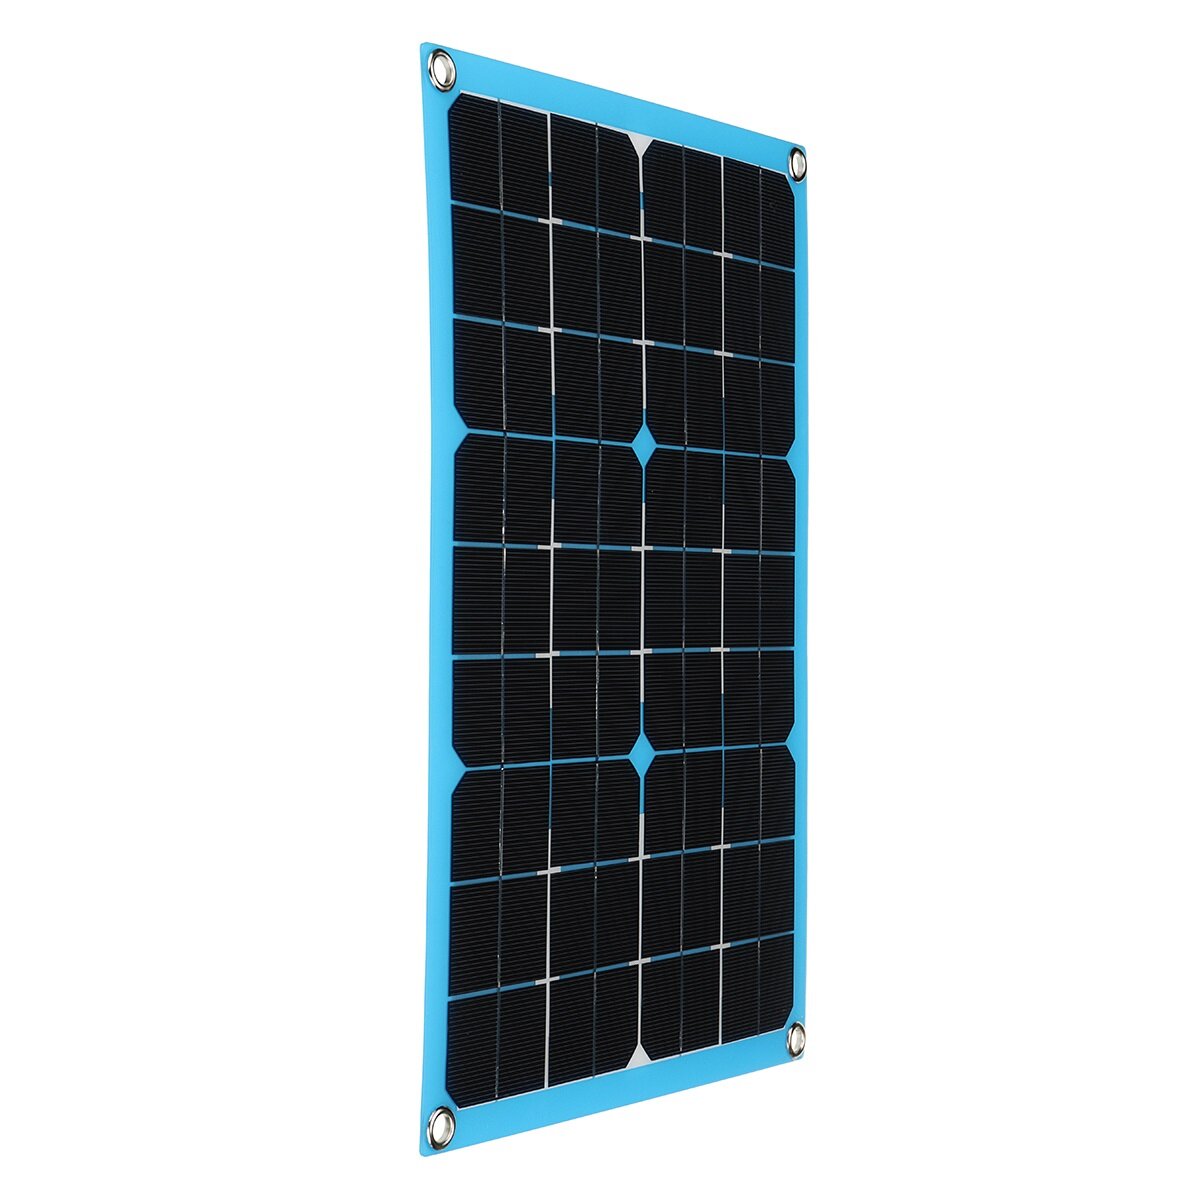 Painel solar monocristalino sistema inversor de energia DC/USB carregador solar com controlador para carro doméstico RV barco Bateria carregador